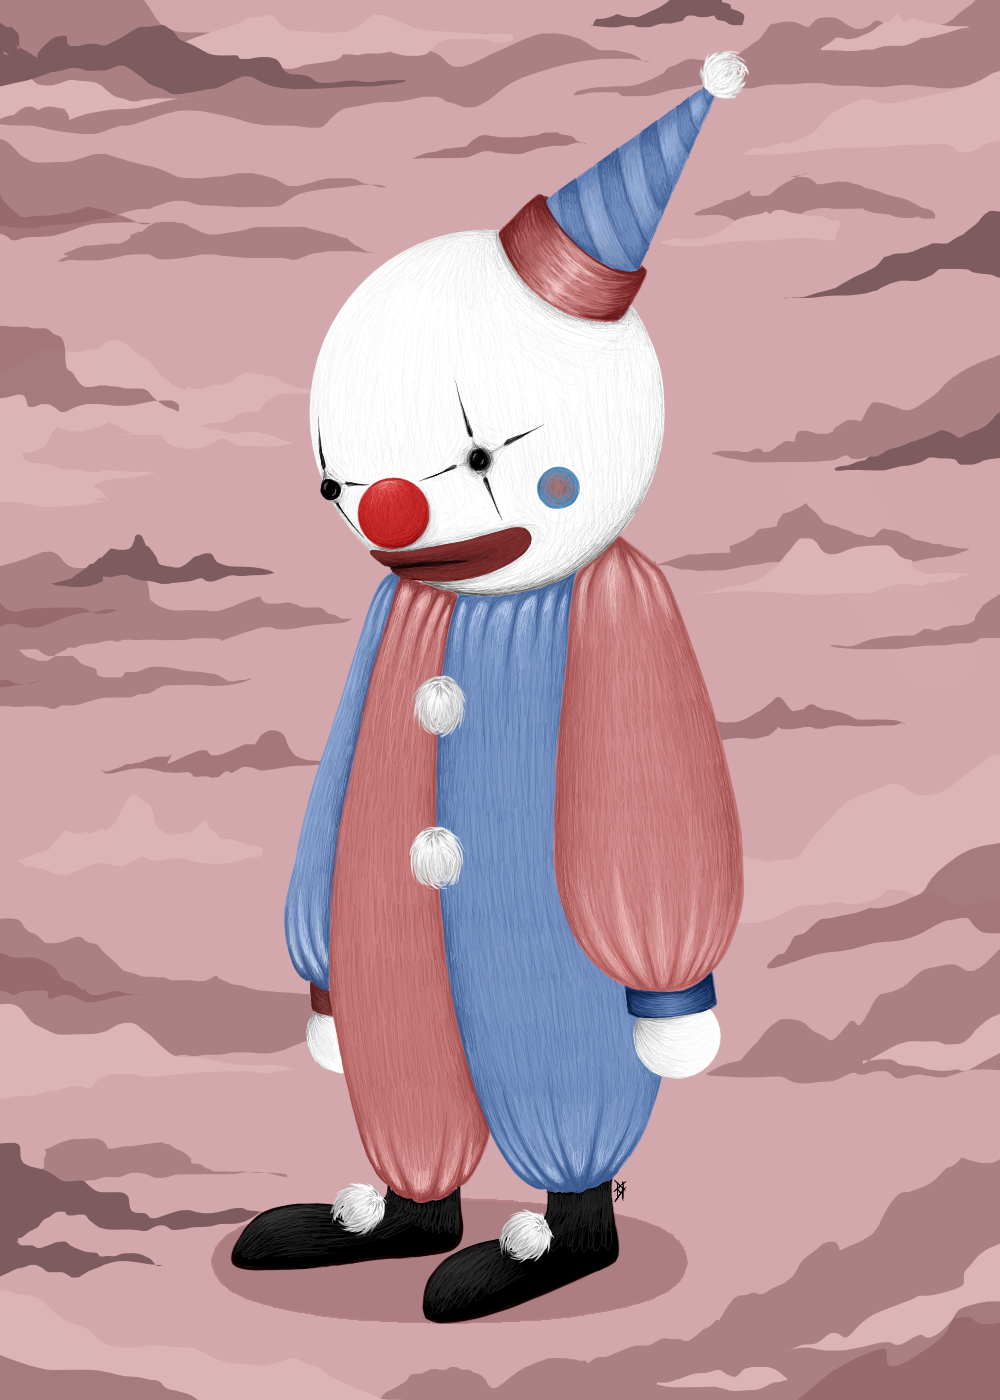 Sad Clown by TheBackroomRat on DeviantArt